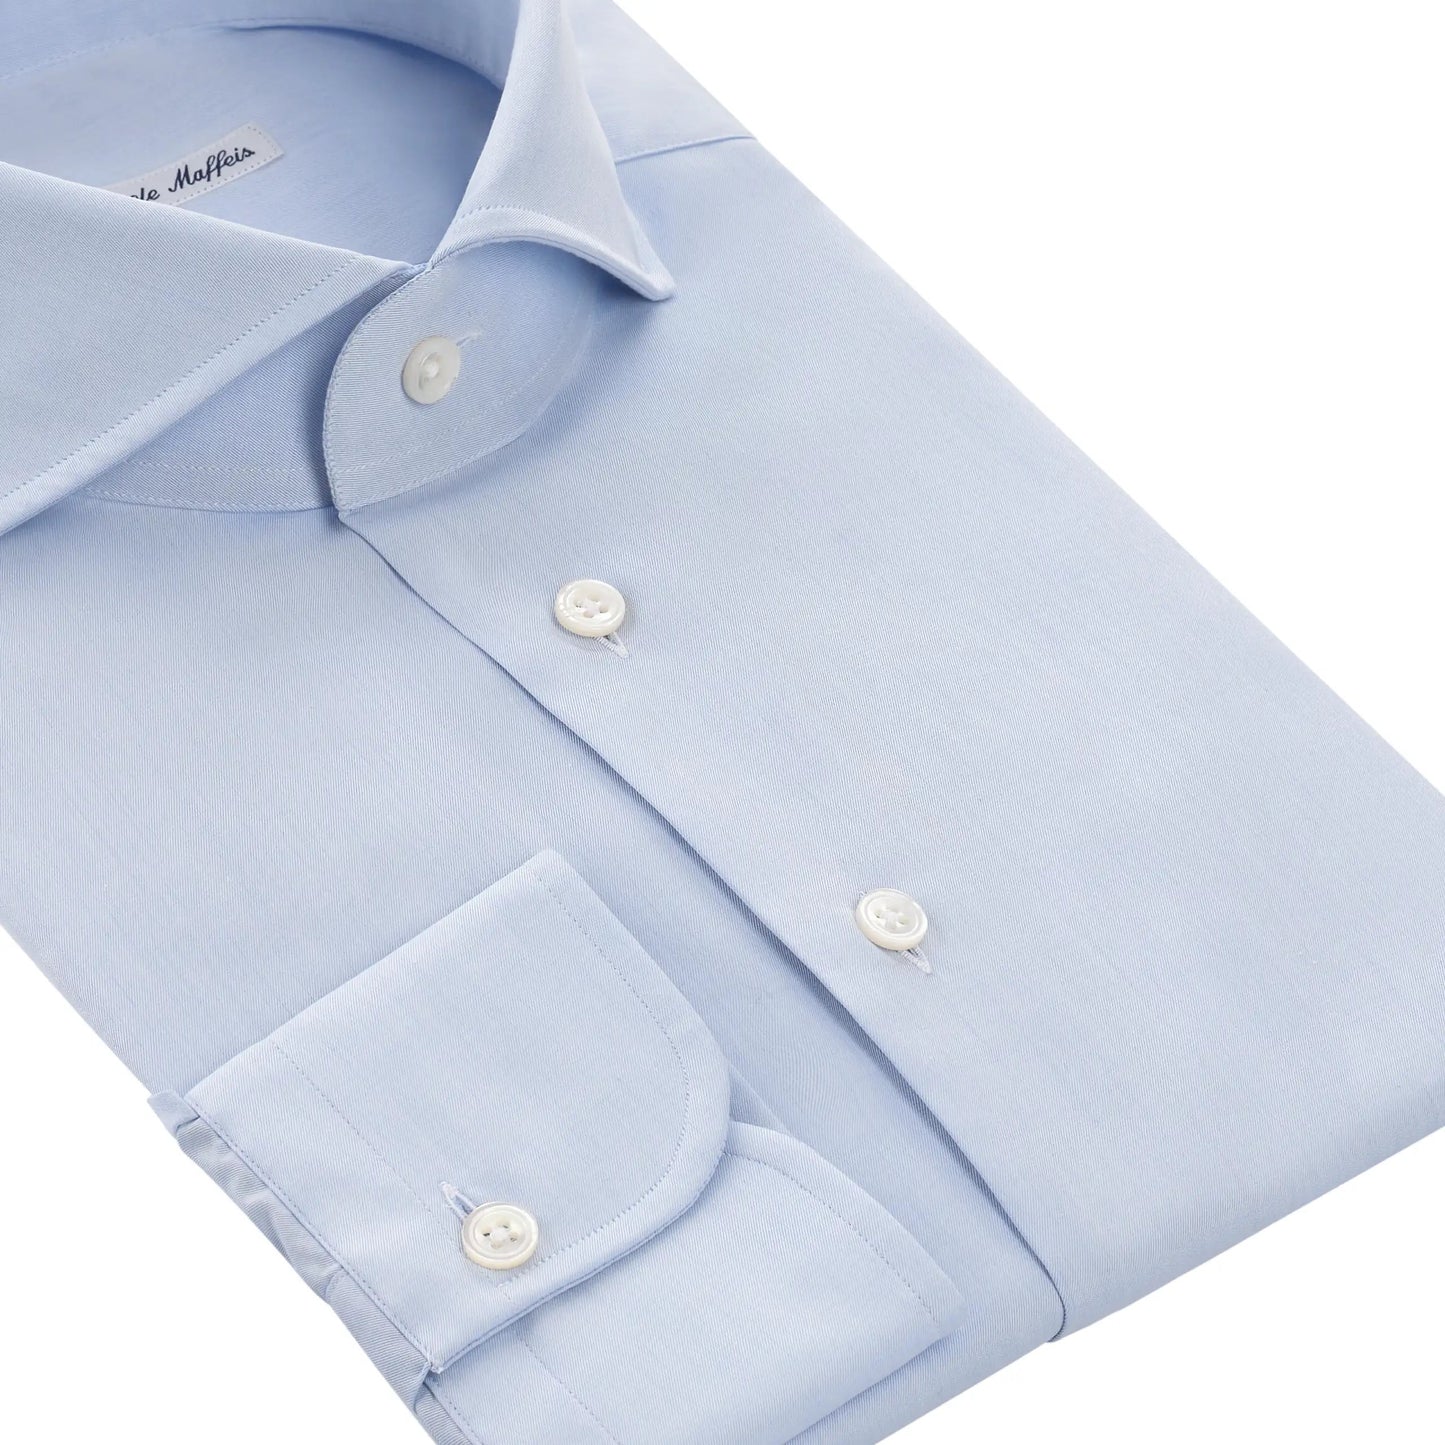 Emanuele Maffeis Plain Cotton Shirt in Blue - SARTALE